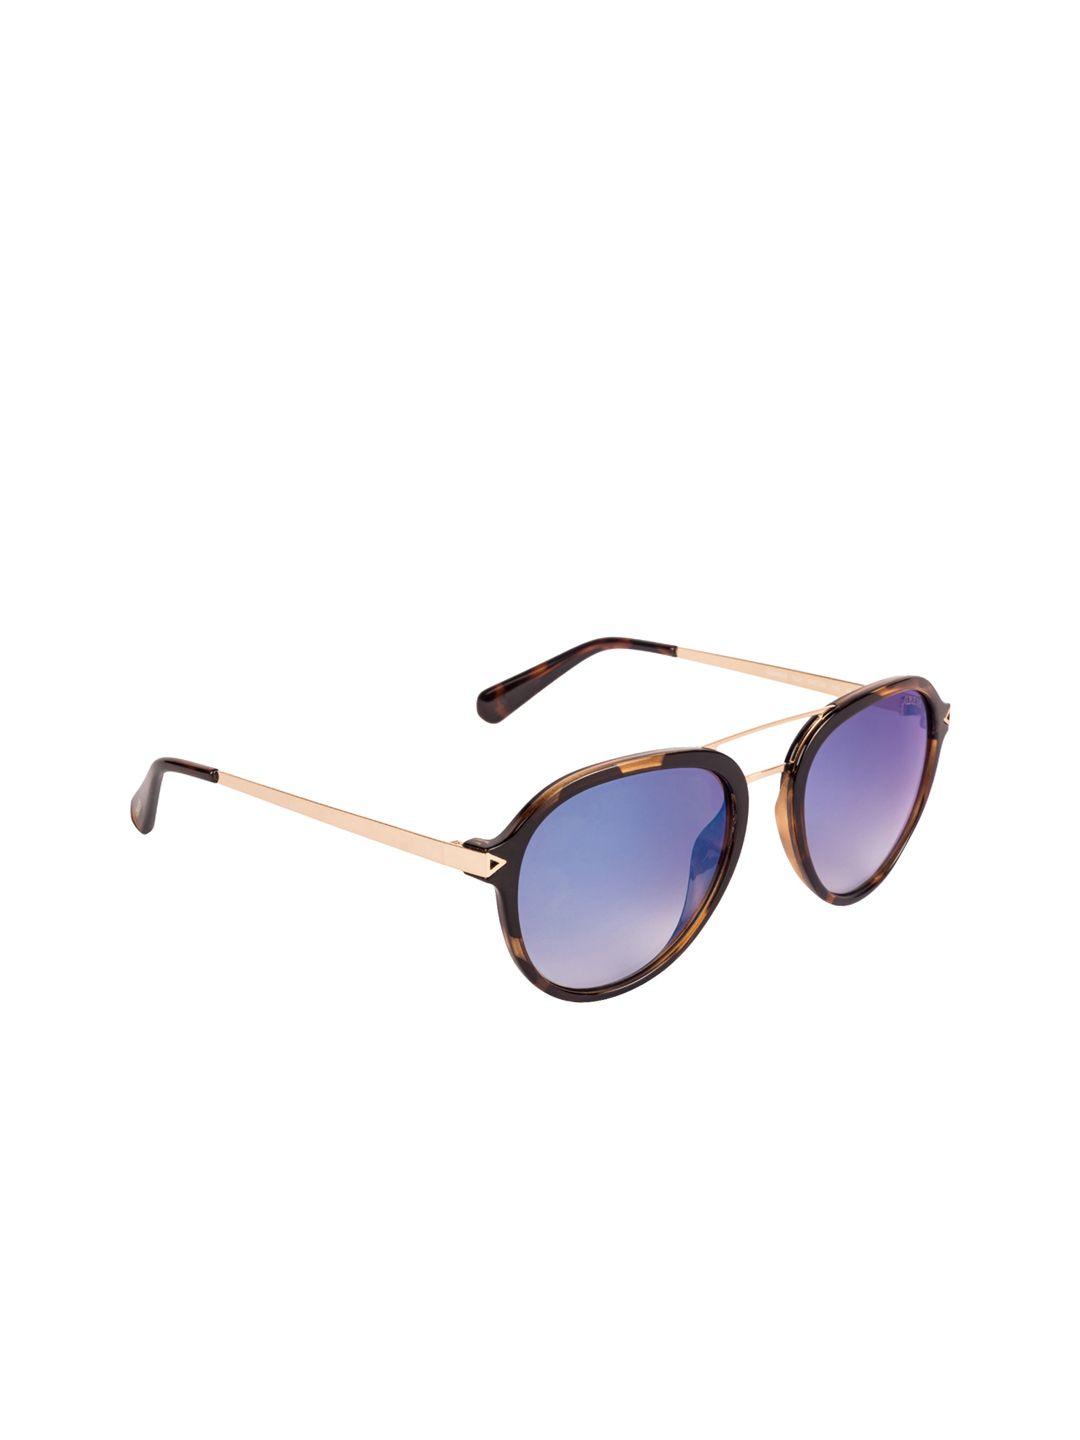 guess-women-oval-sunglasses-gu6924-54-52x